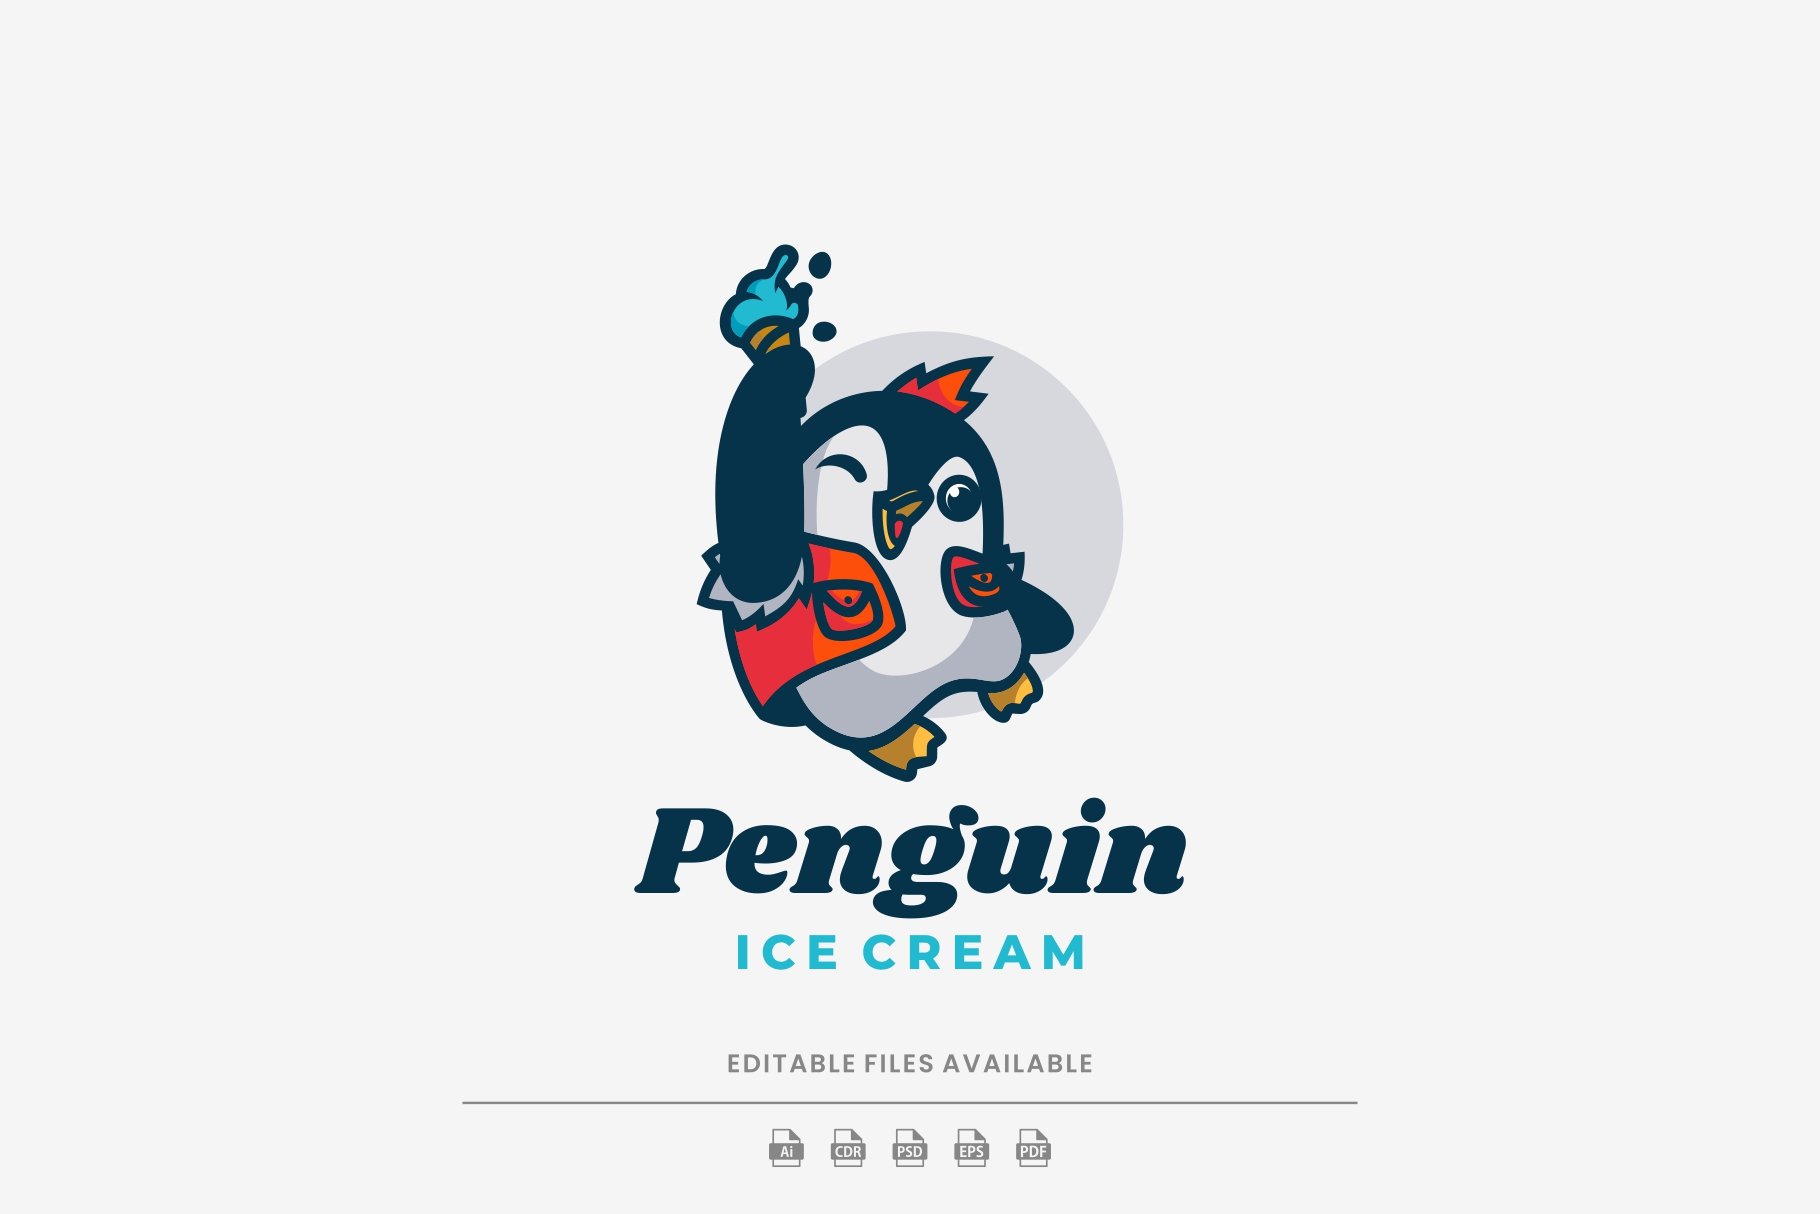 Penguin Mascot Cartoon Logo cover image.